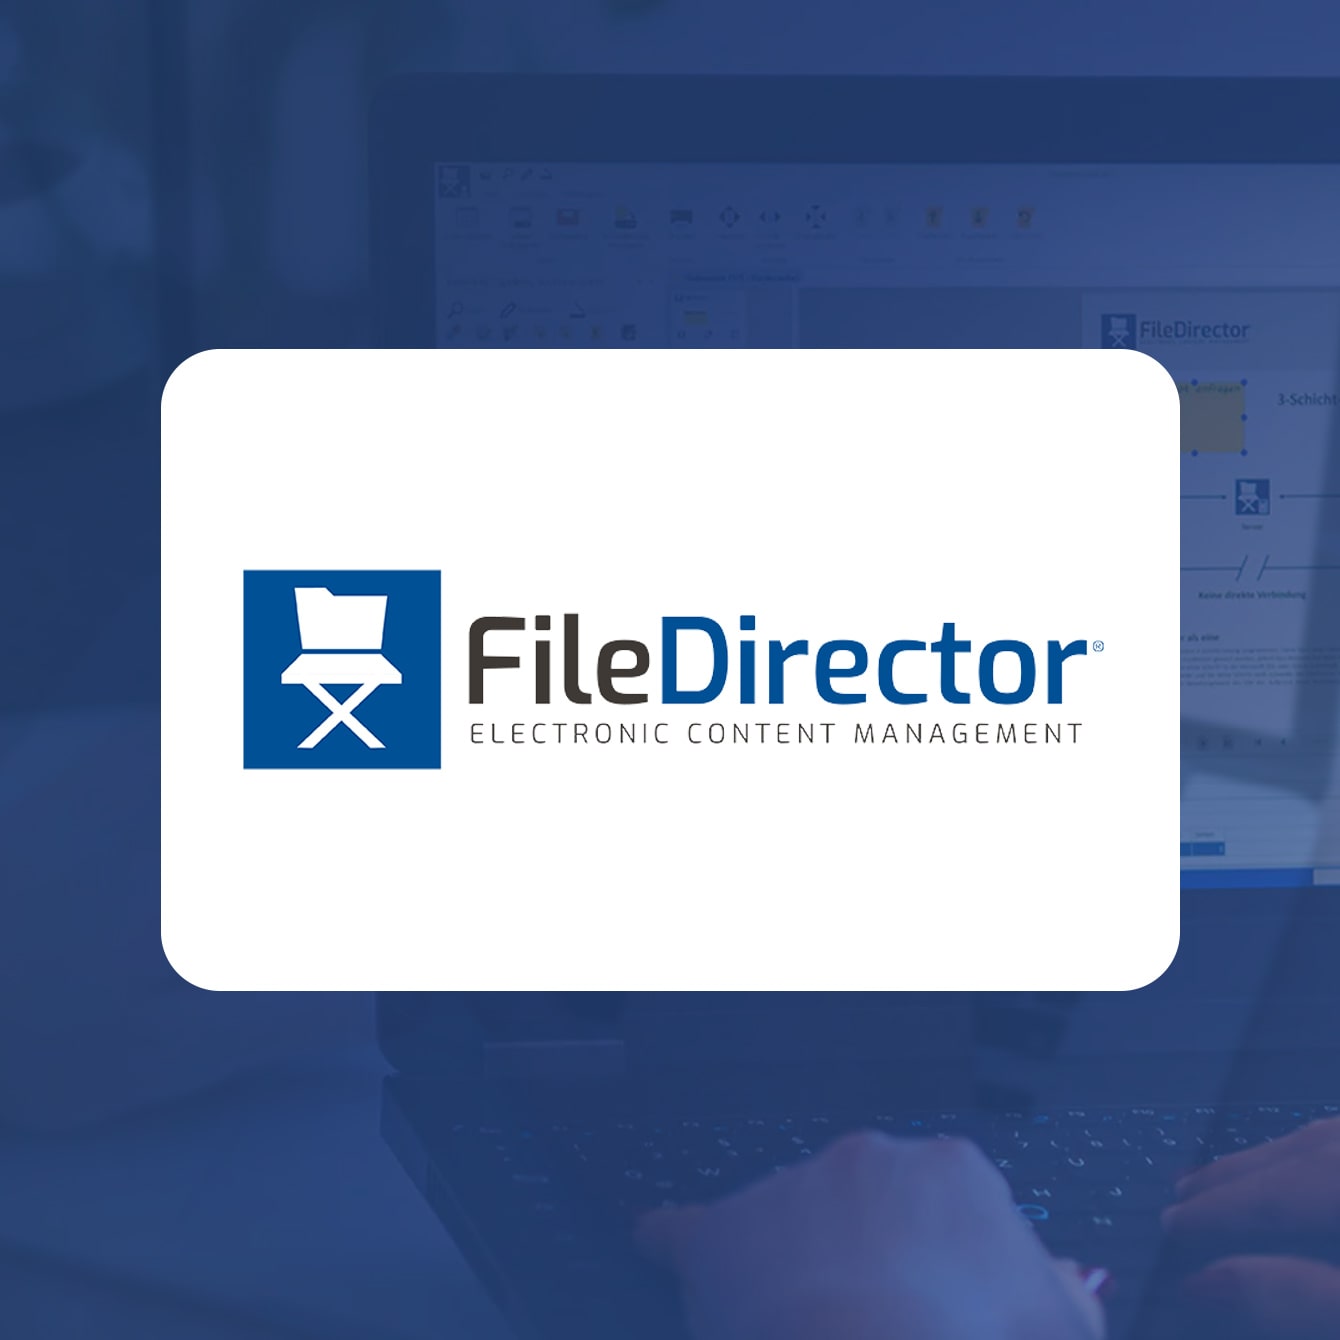 filedirector software logo and banner 